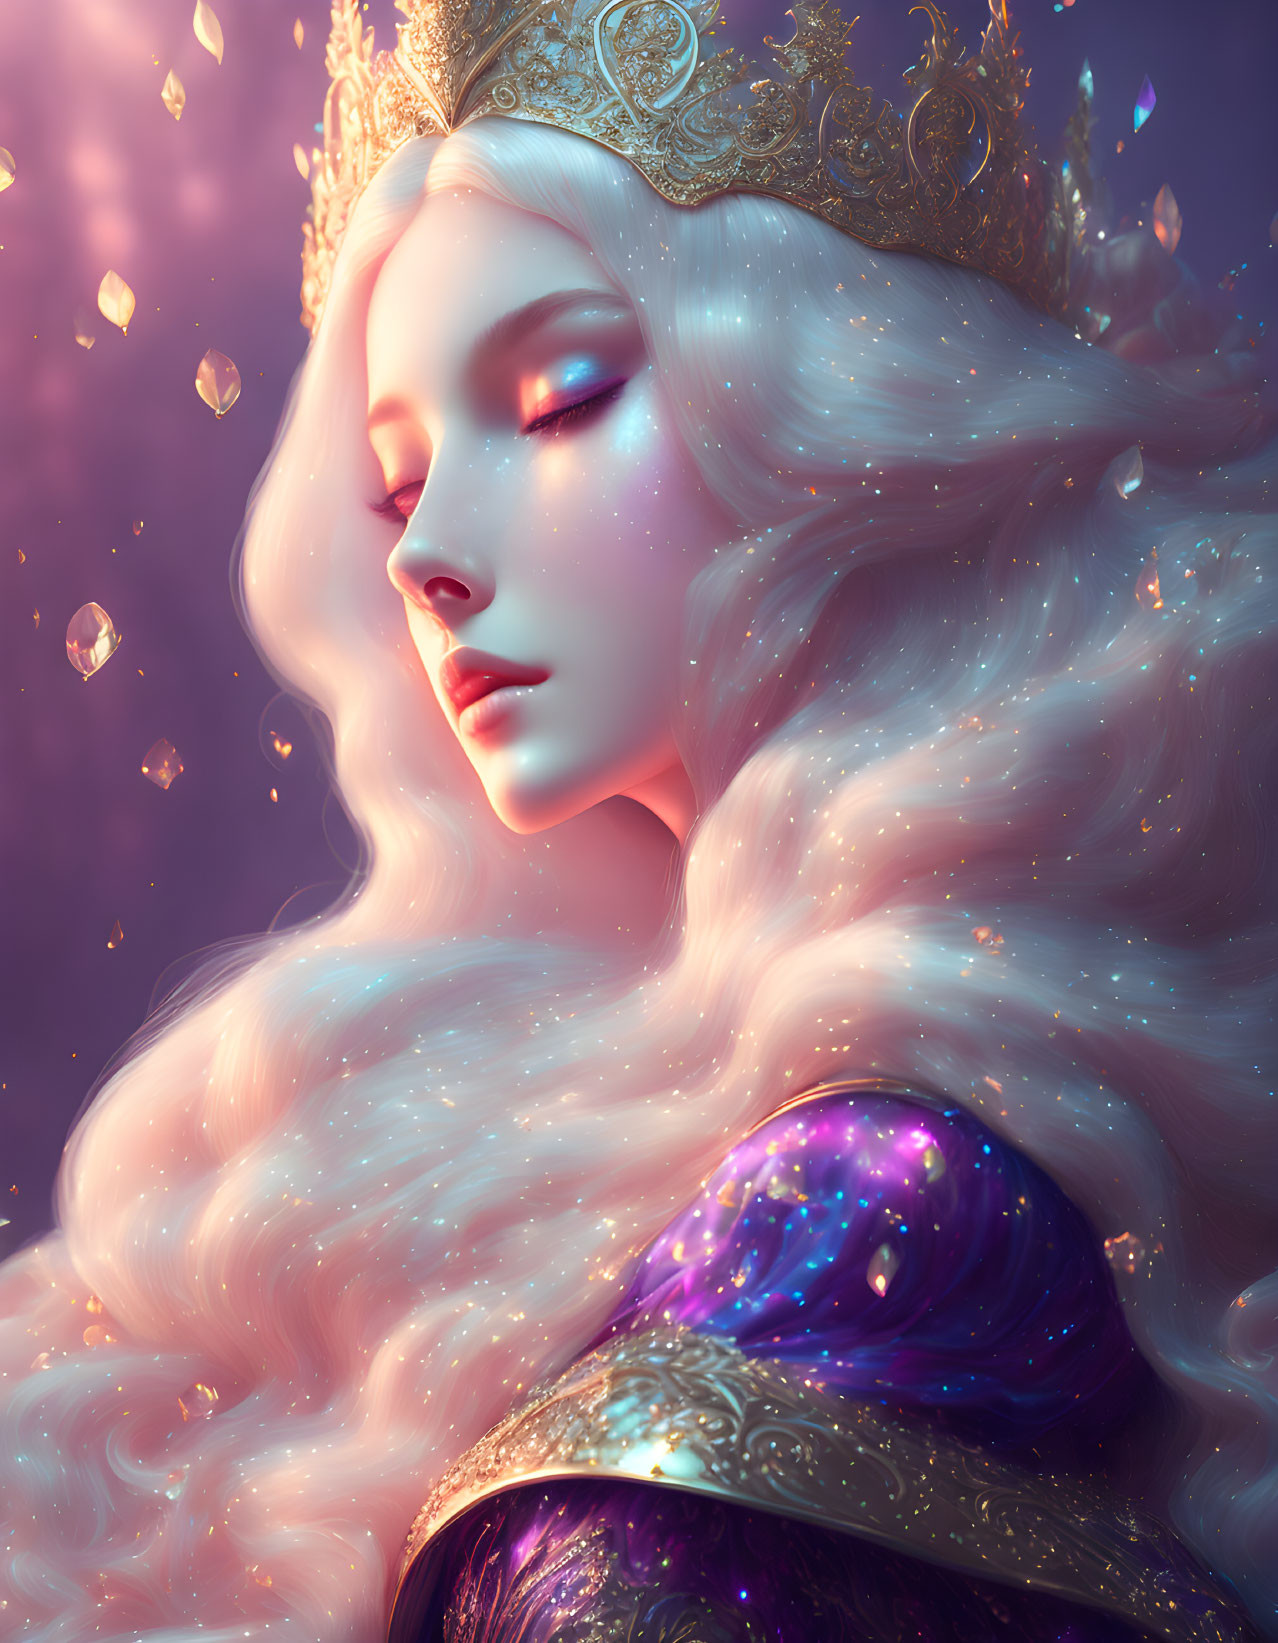 Aurora - Sleeping Beauty